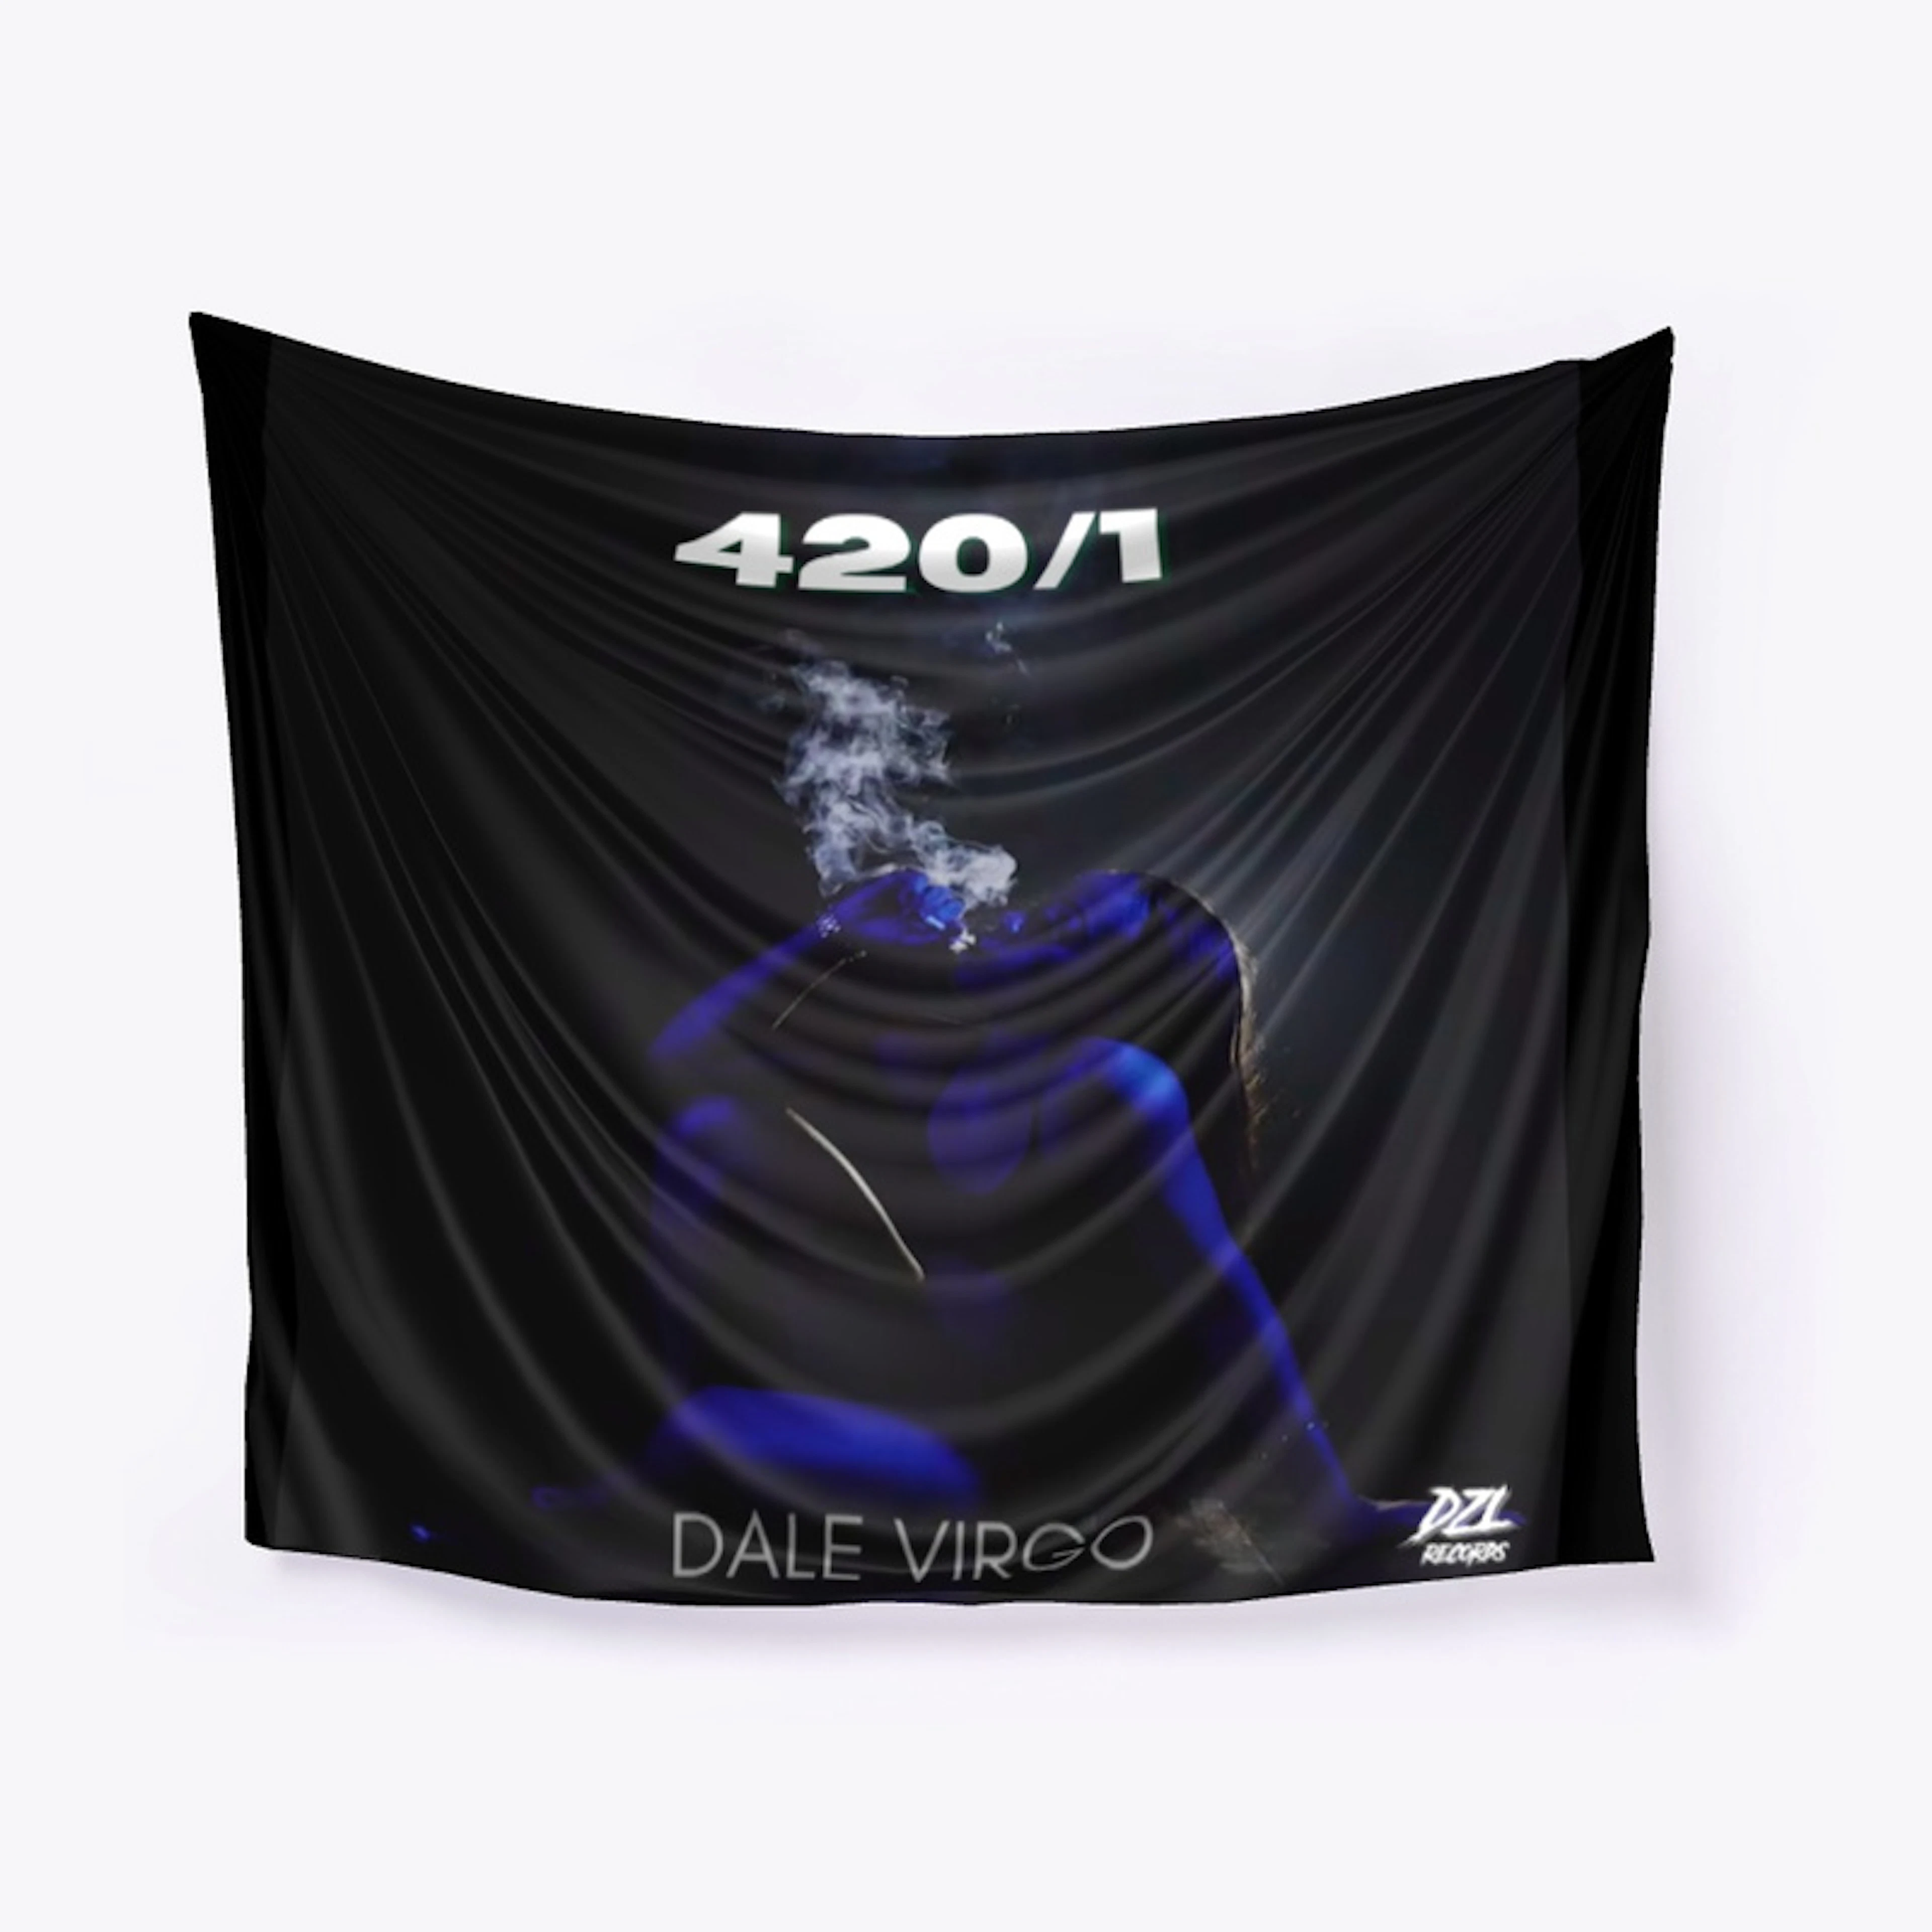 Dale Virgo 420/1 Merch